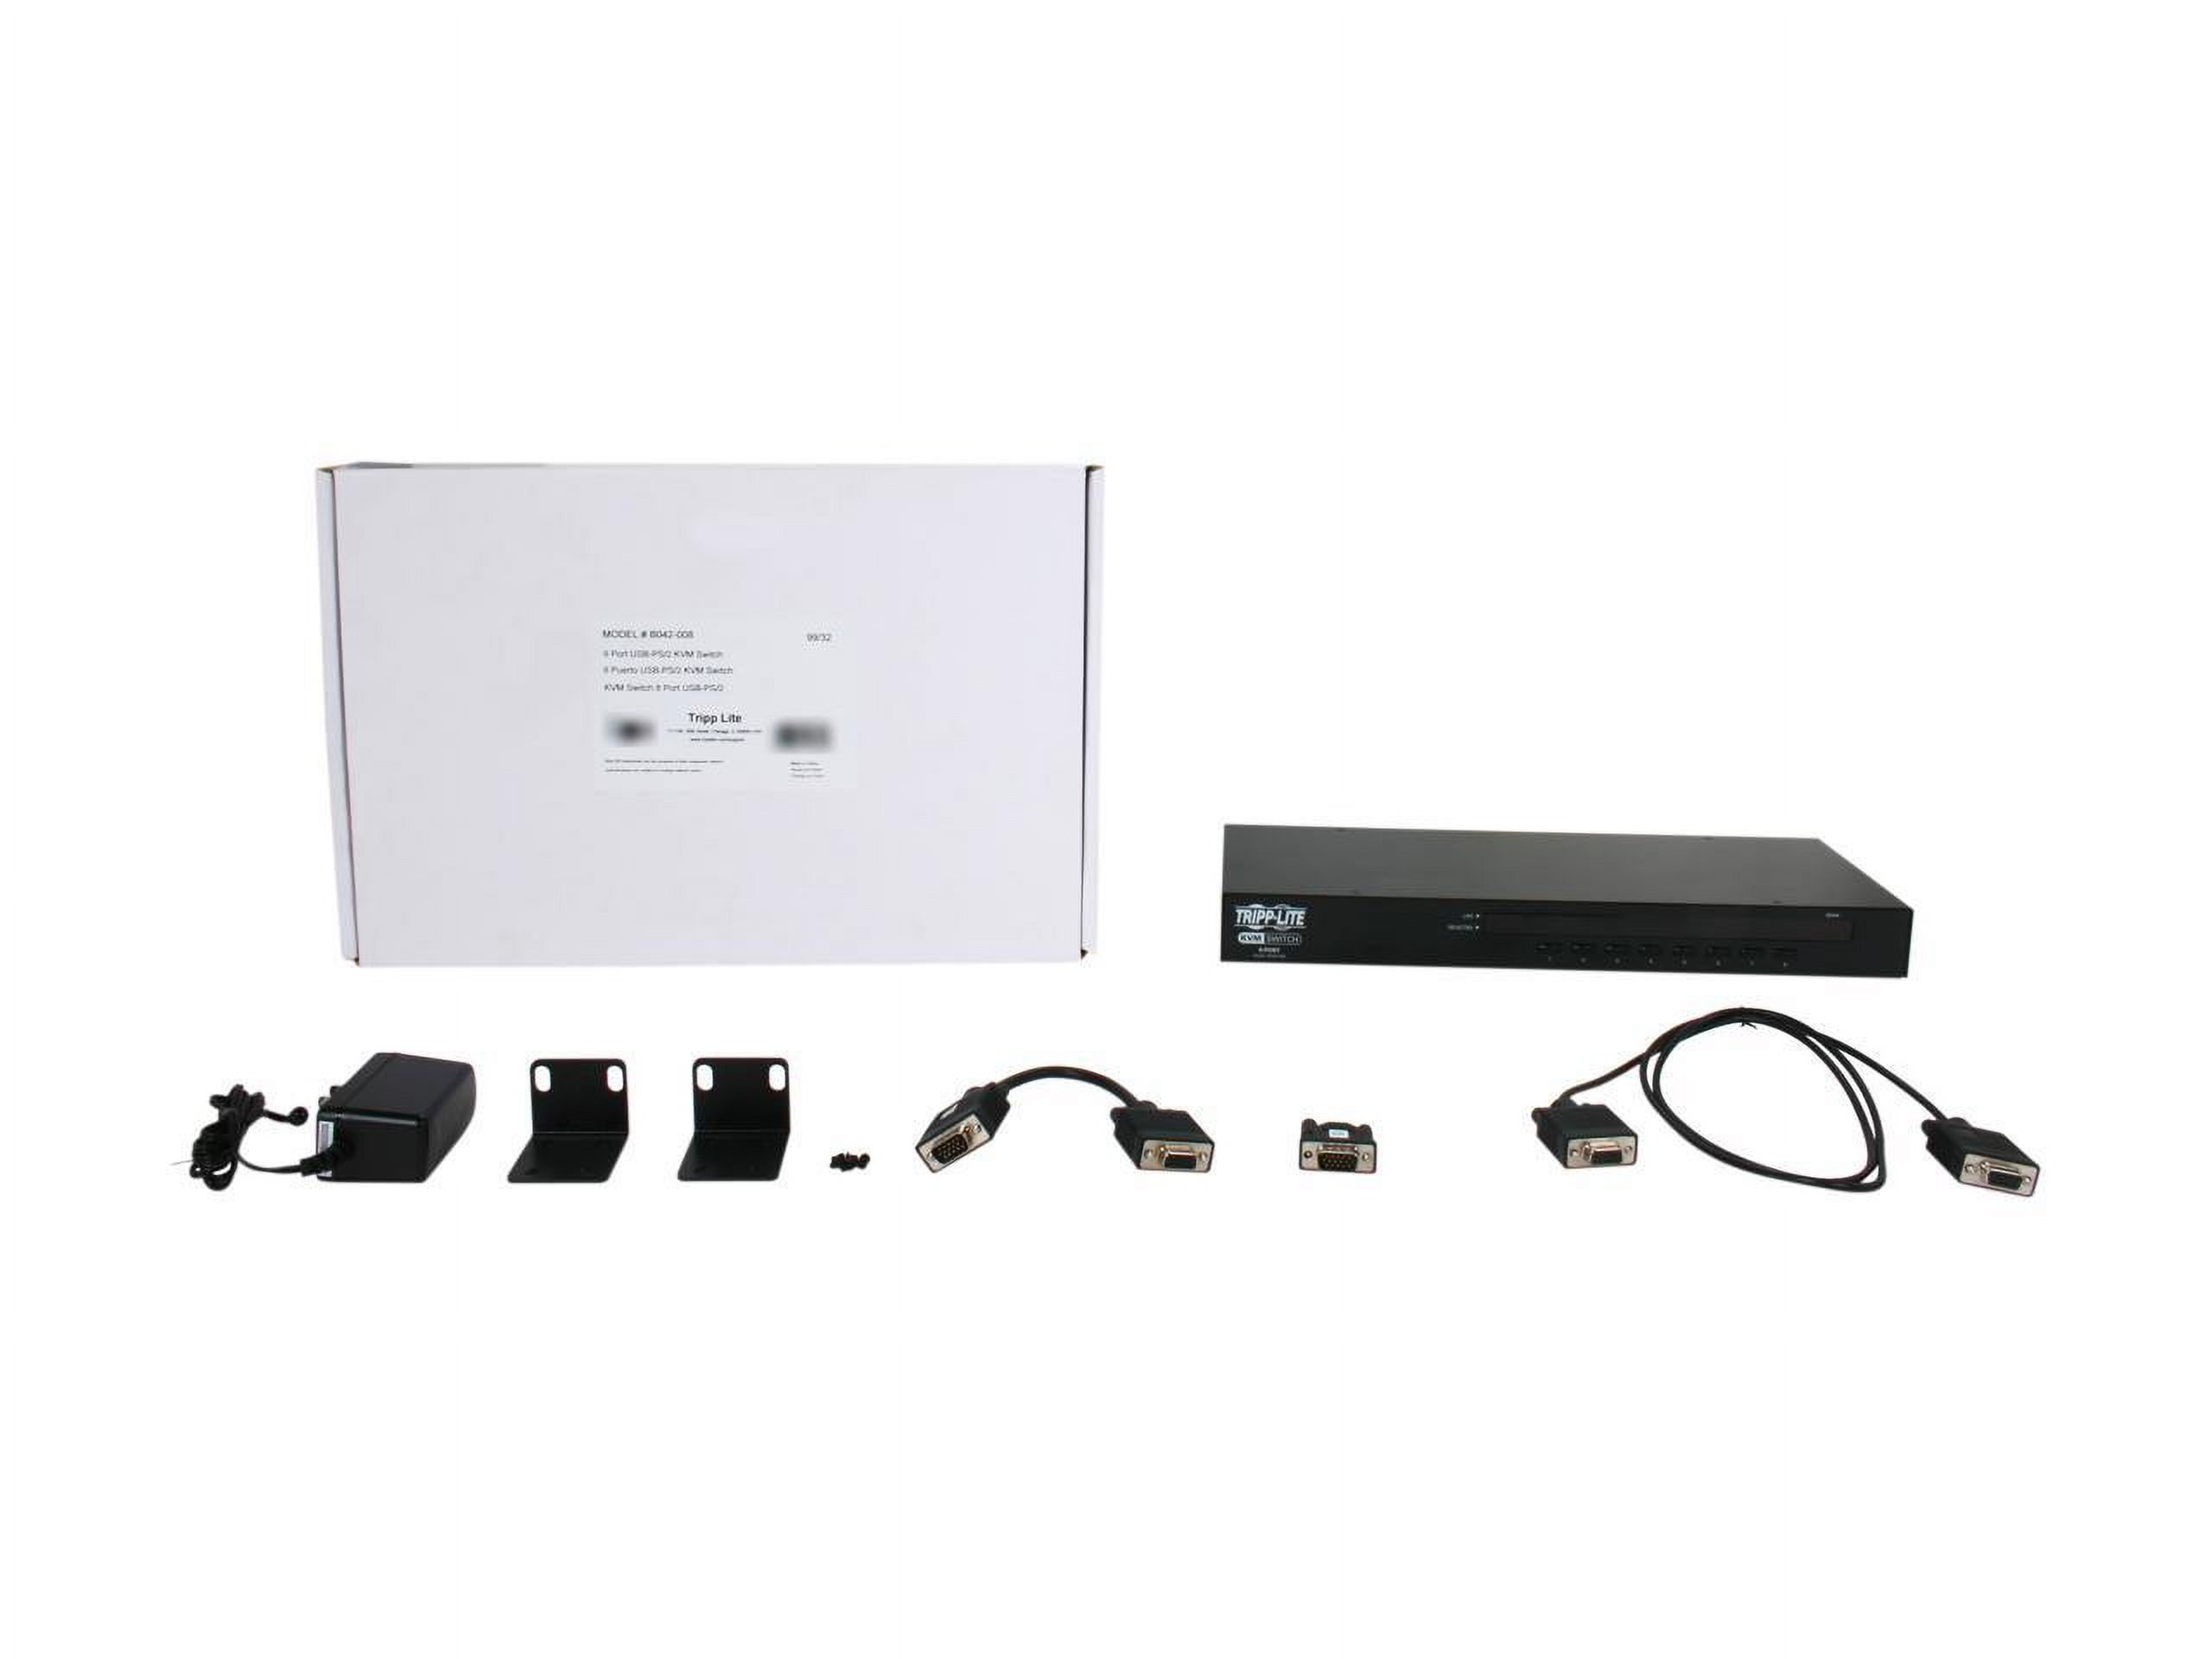 Tripp Lite 8-Port 1U Rack-Mount USB/PS2 KVM Switch with On-Screen Display (B042-008) - image 4 of 4